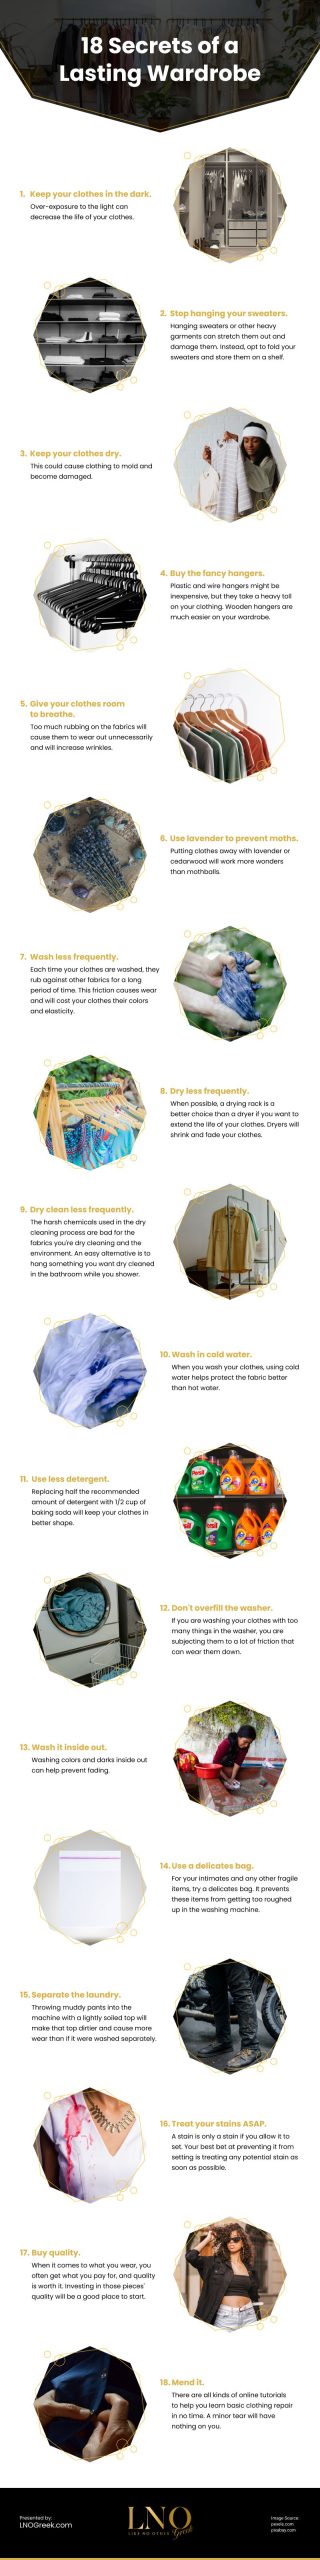 18 Secrets of a Lasting Wardrobe Infographic